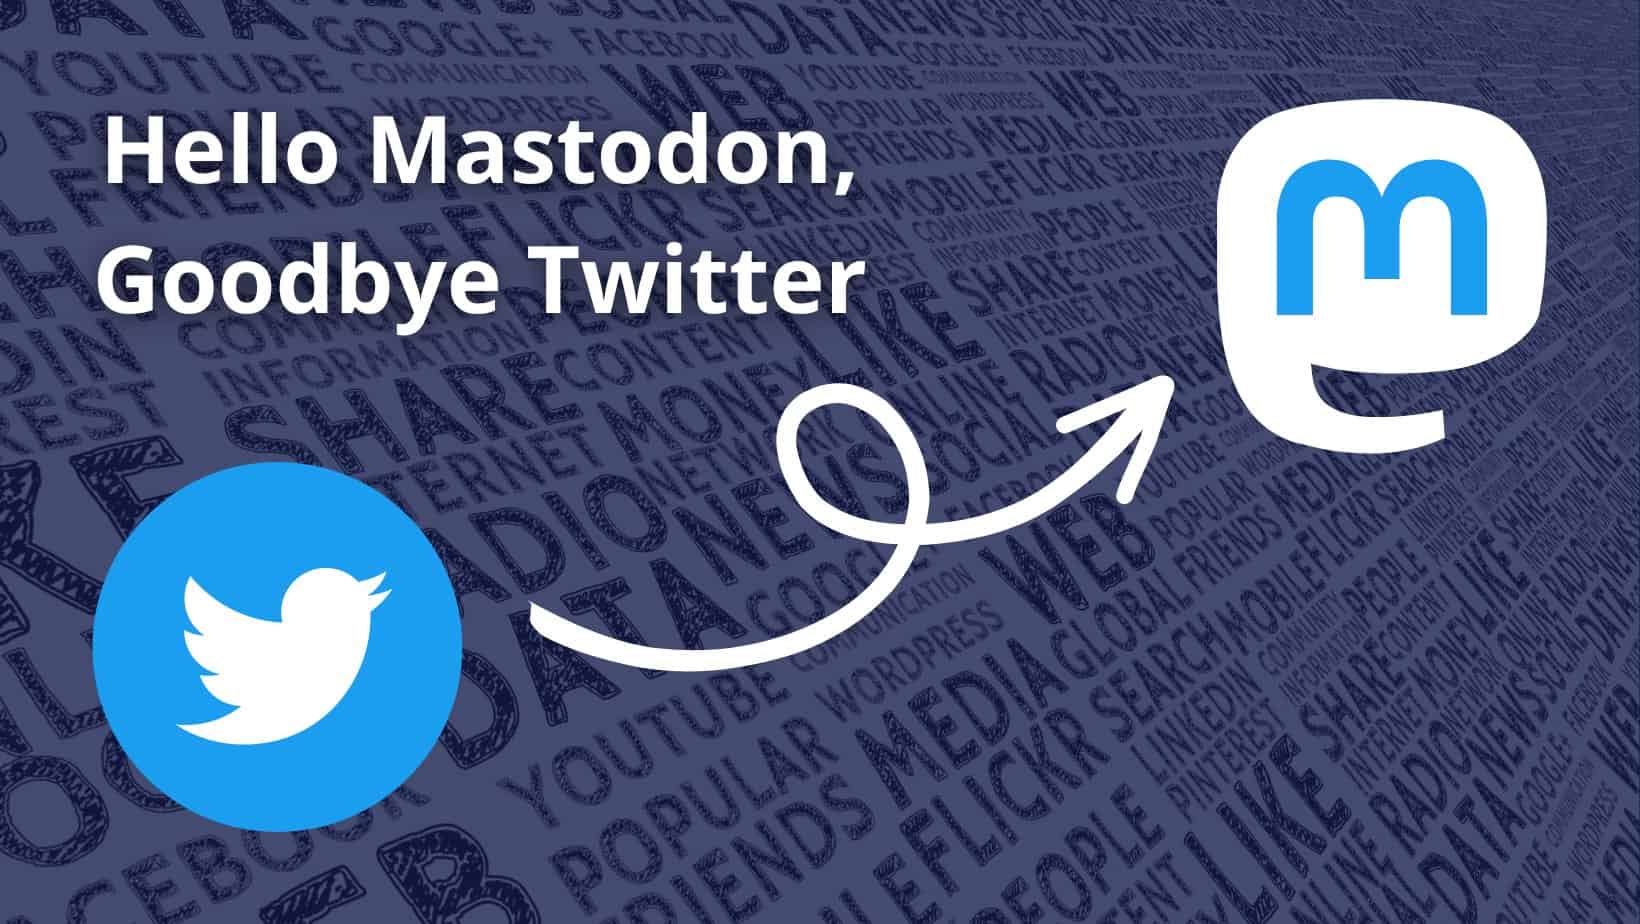 Featured image for “Hello Mastodon, Goodbye Twitter”